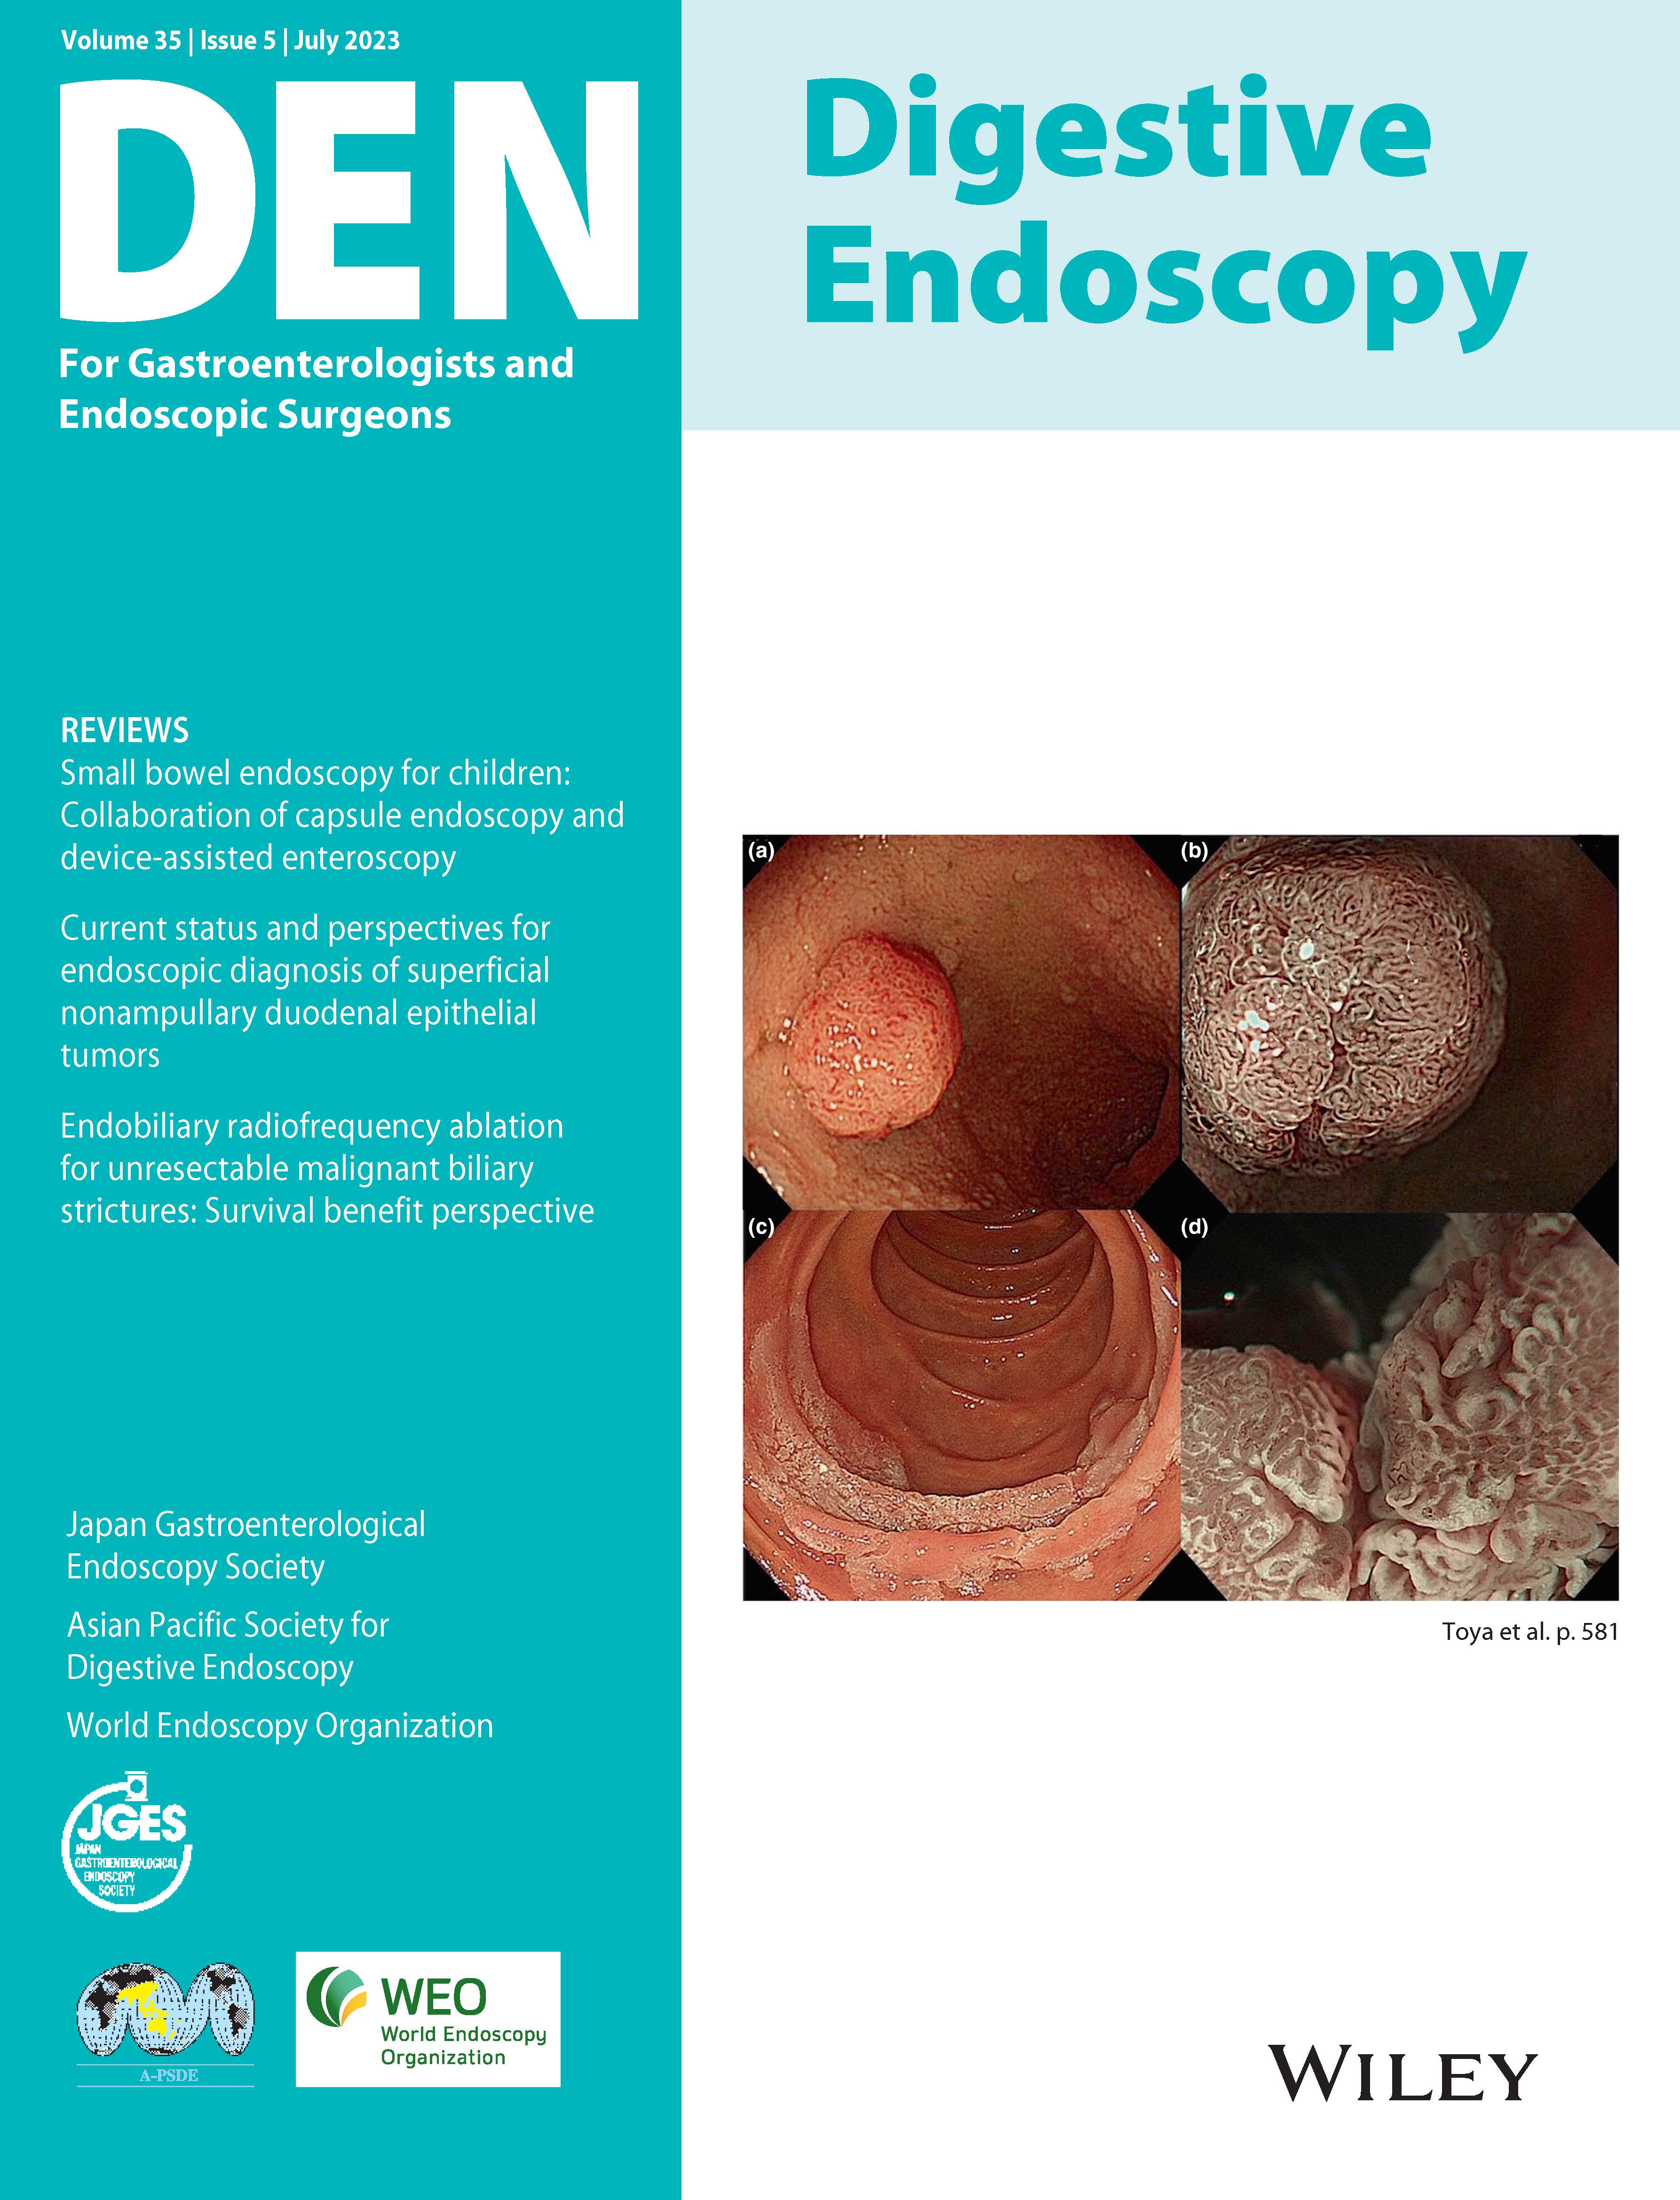 Digestive Endoscopy Vol35-5